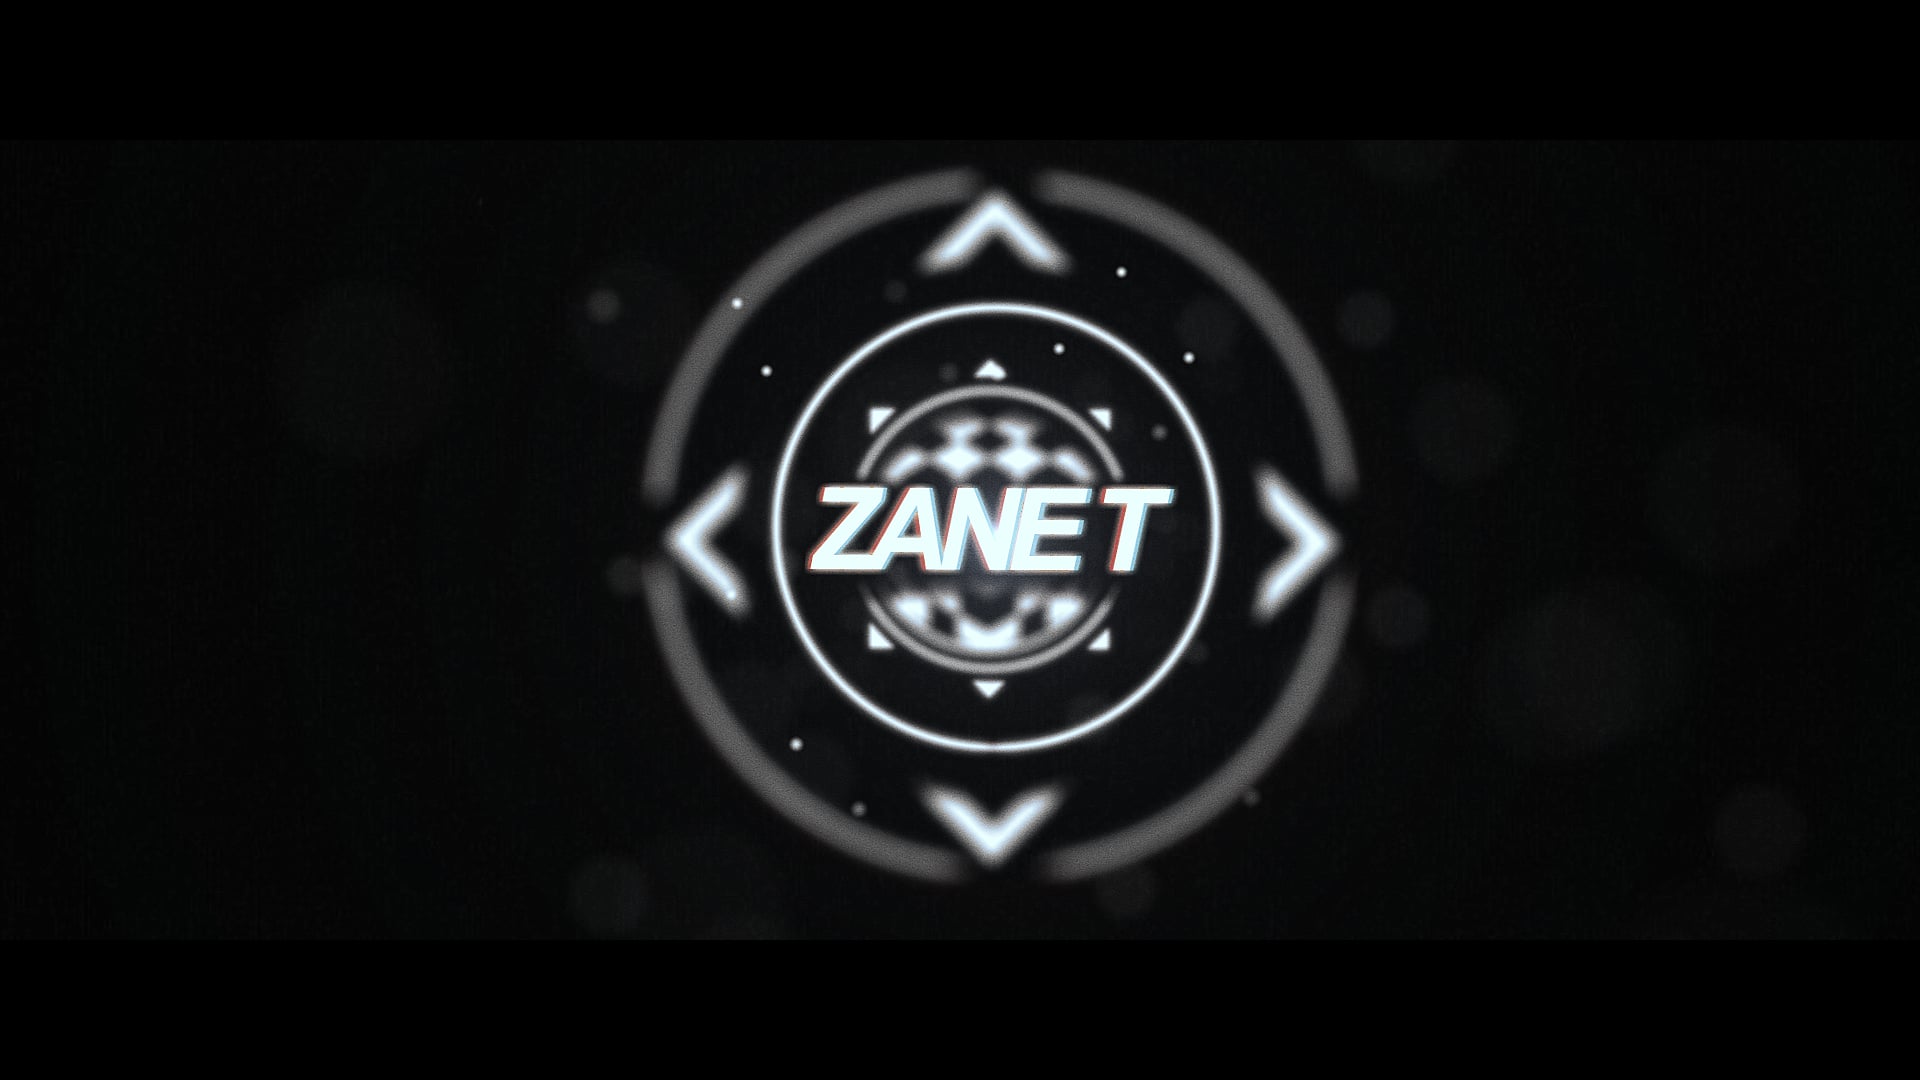 Zane T "Saviour" - Animated Release Trailer